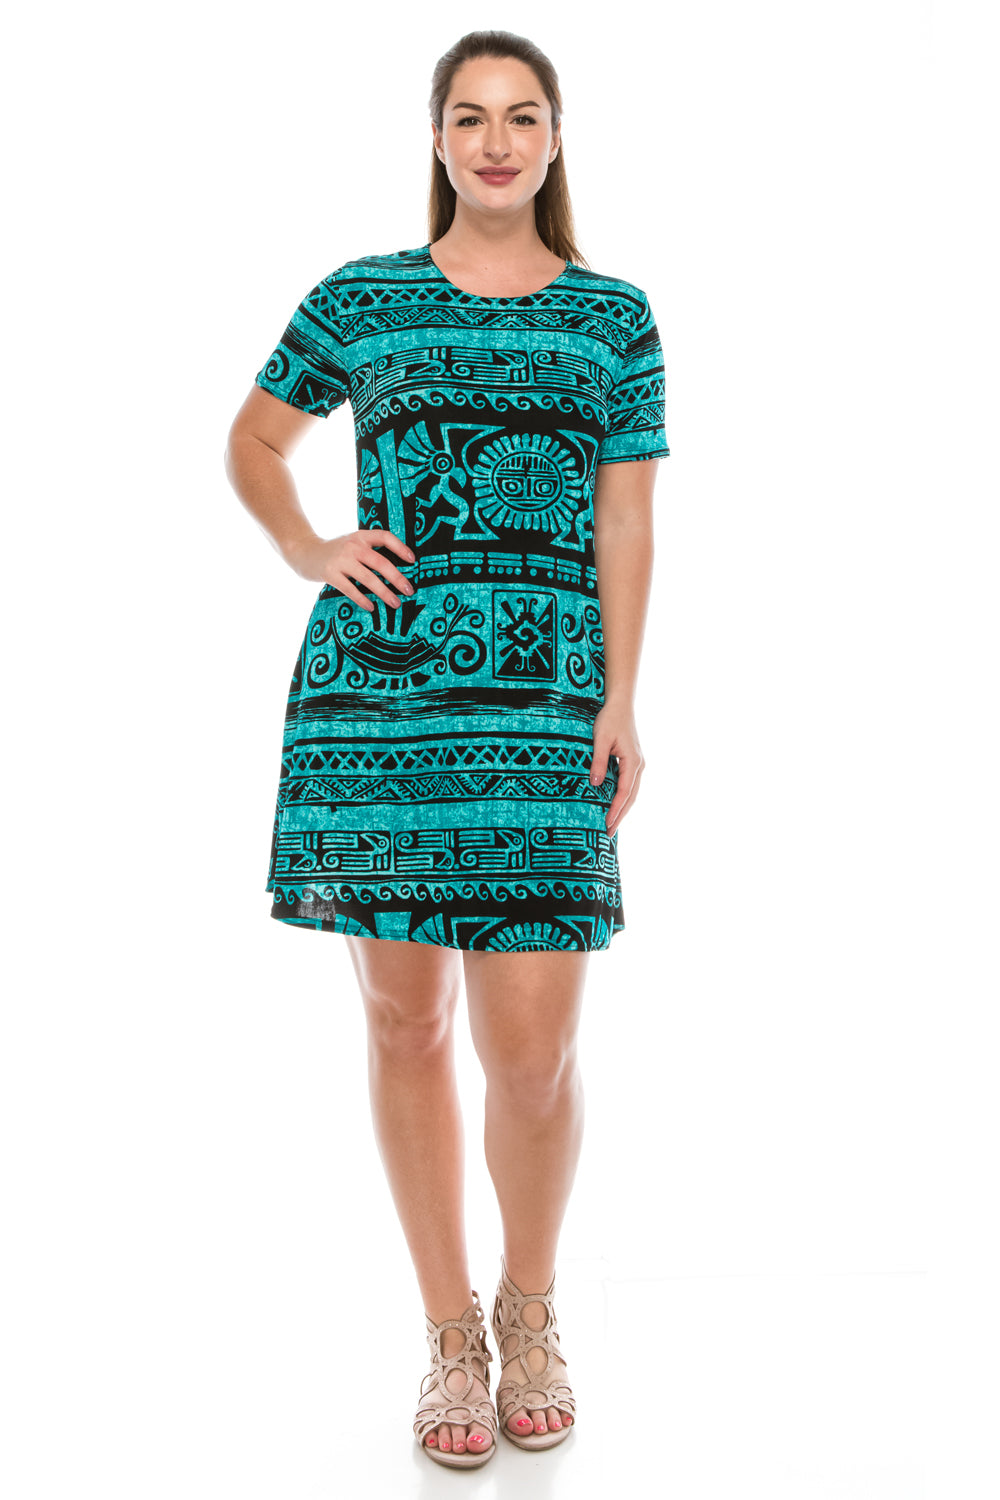 Jostar Women's Stretchy Missy Dress Short Sleeve Print, 704BN-SP-W901 - Jostar Online